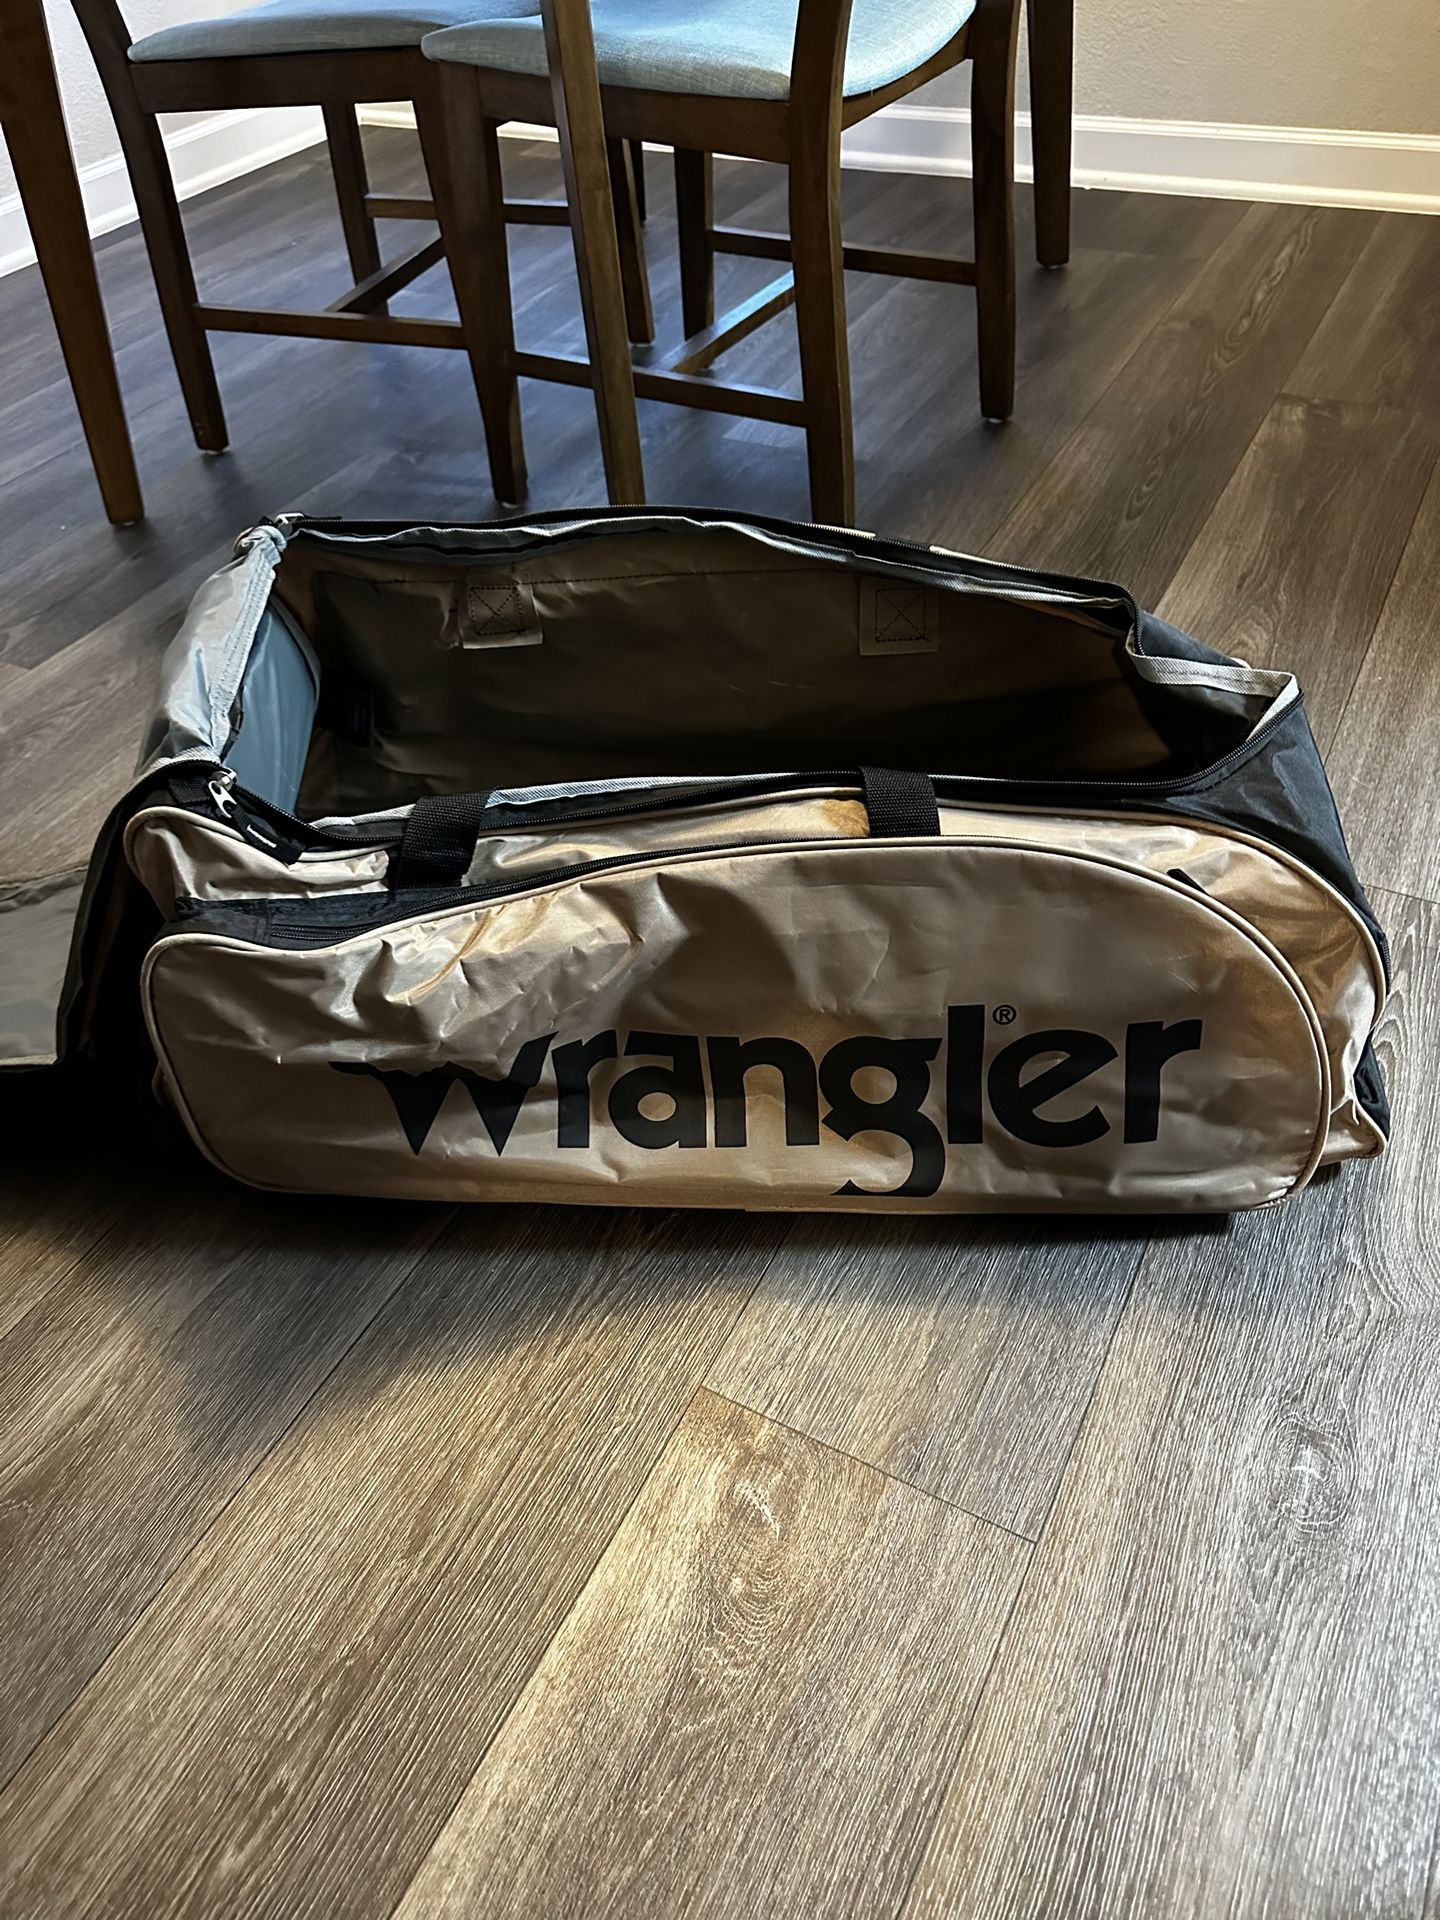 Wrangler Rolling Duffle Bag